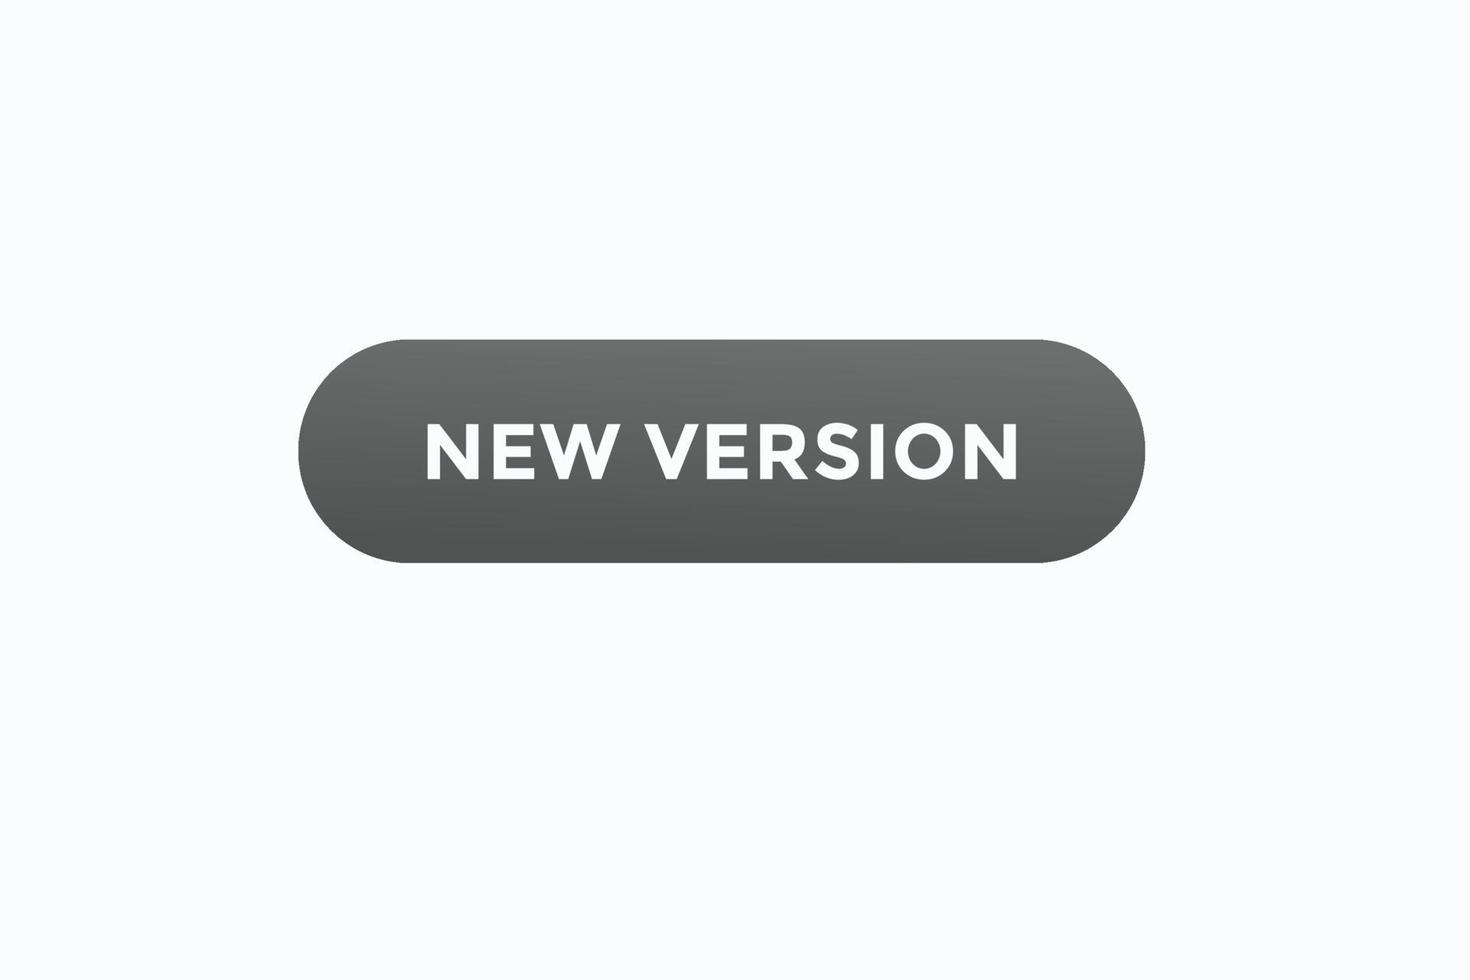 new version button vectors.sign label speech bubble new version vector